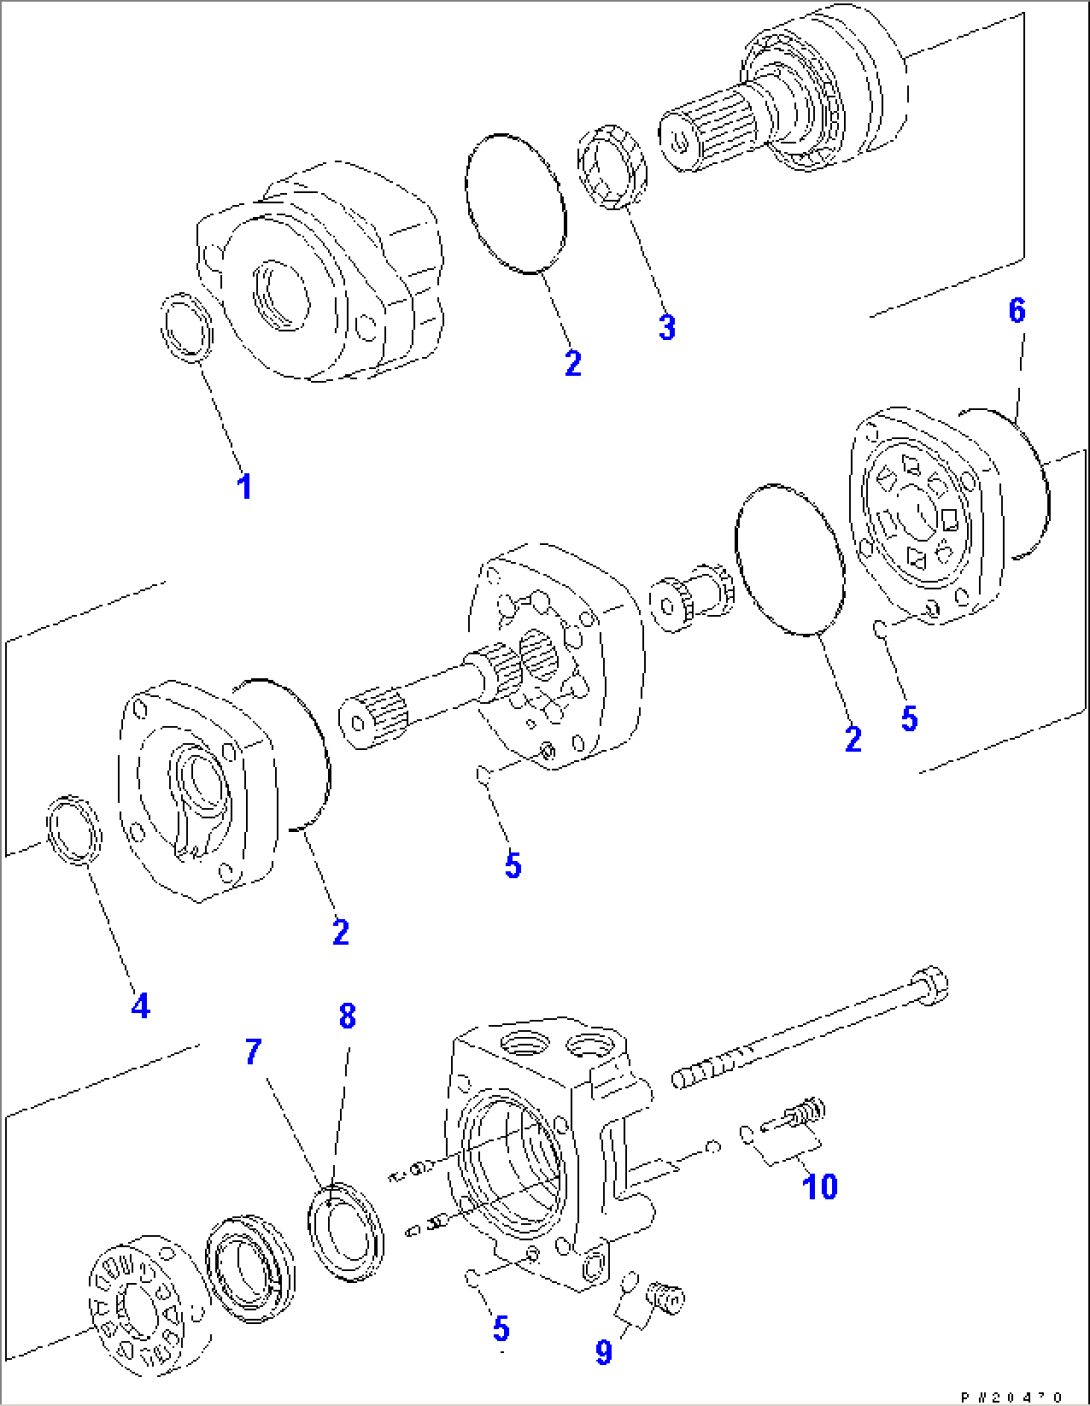 SIDE CONVEYOR MOTOR (2-200AS2S-E3343 TYPE) (INNER PARTS)(#1301-.)